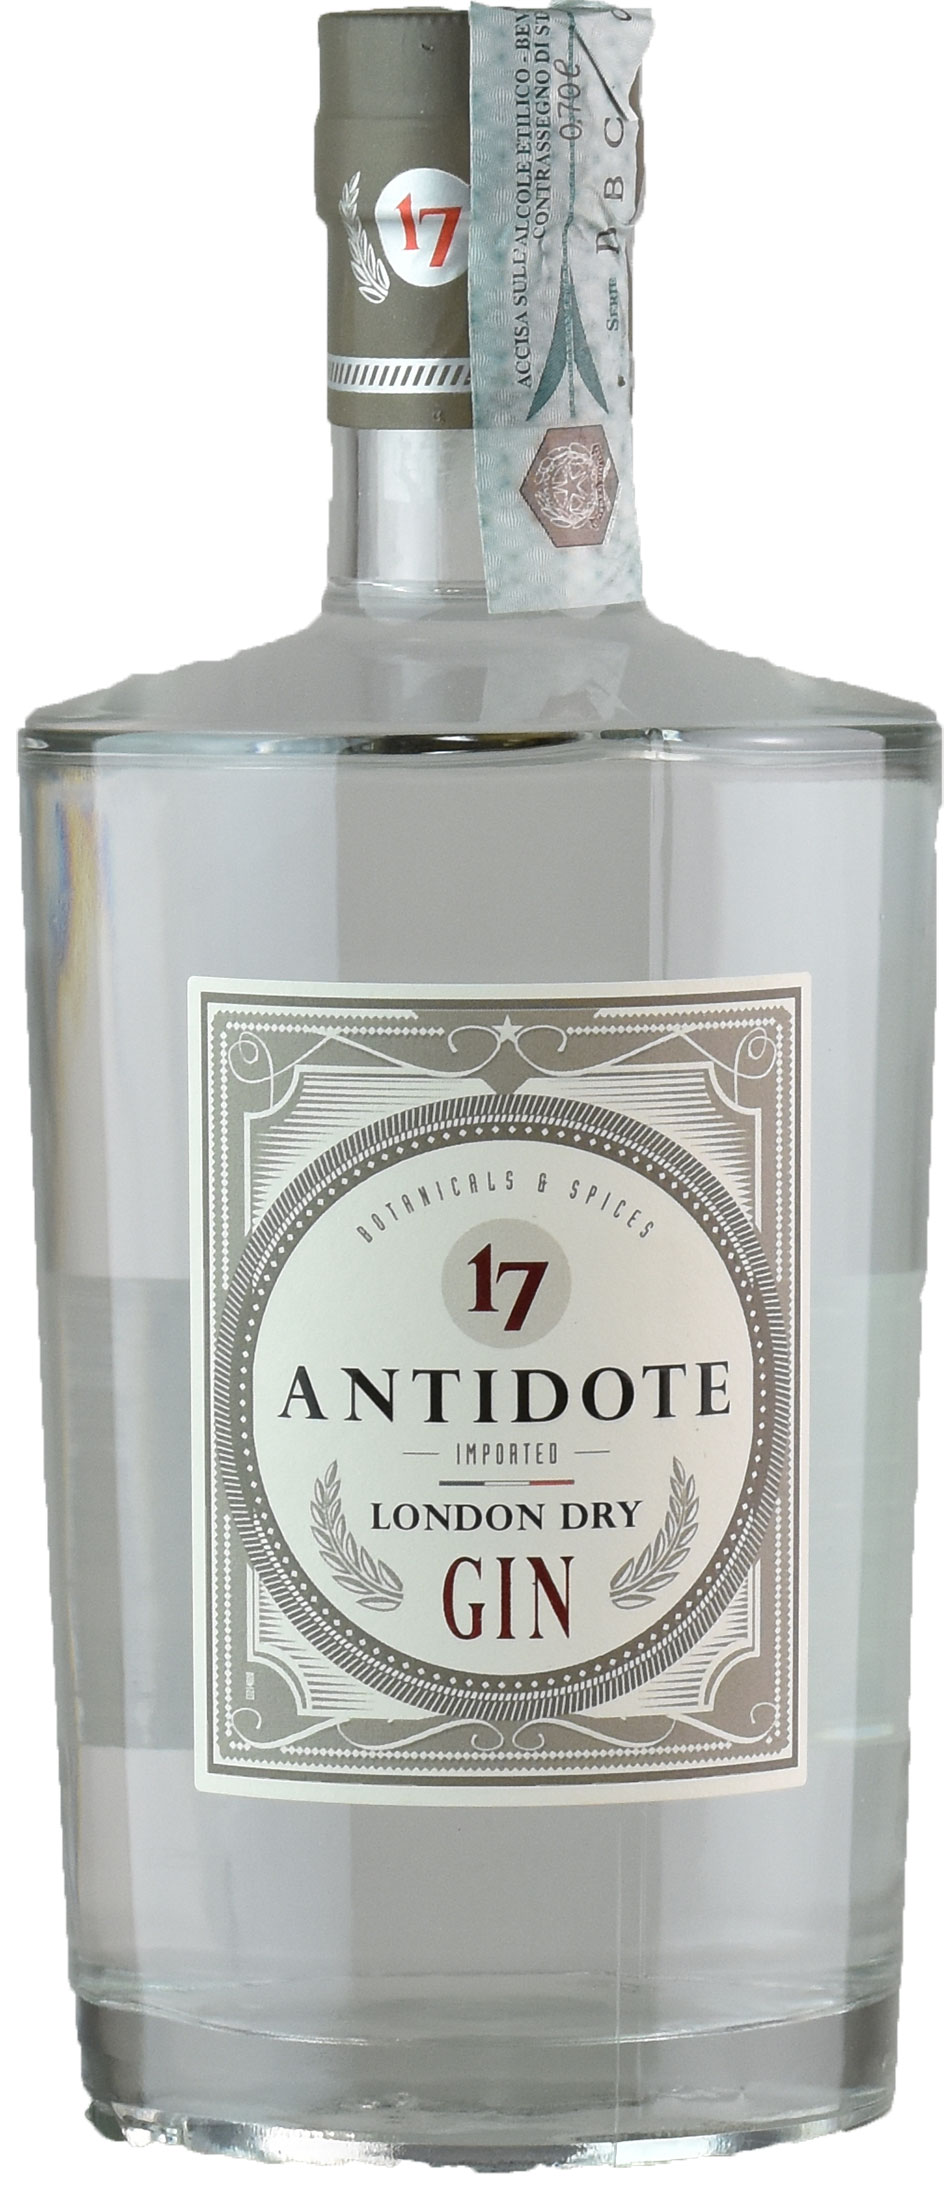 Antidote Gin London Dry